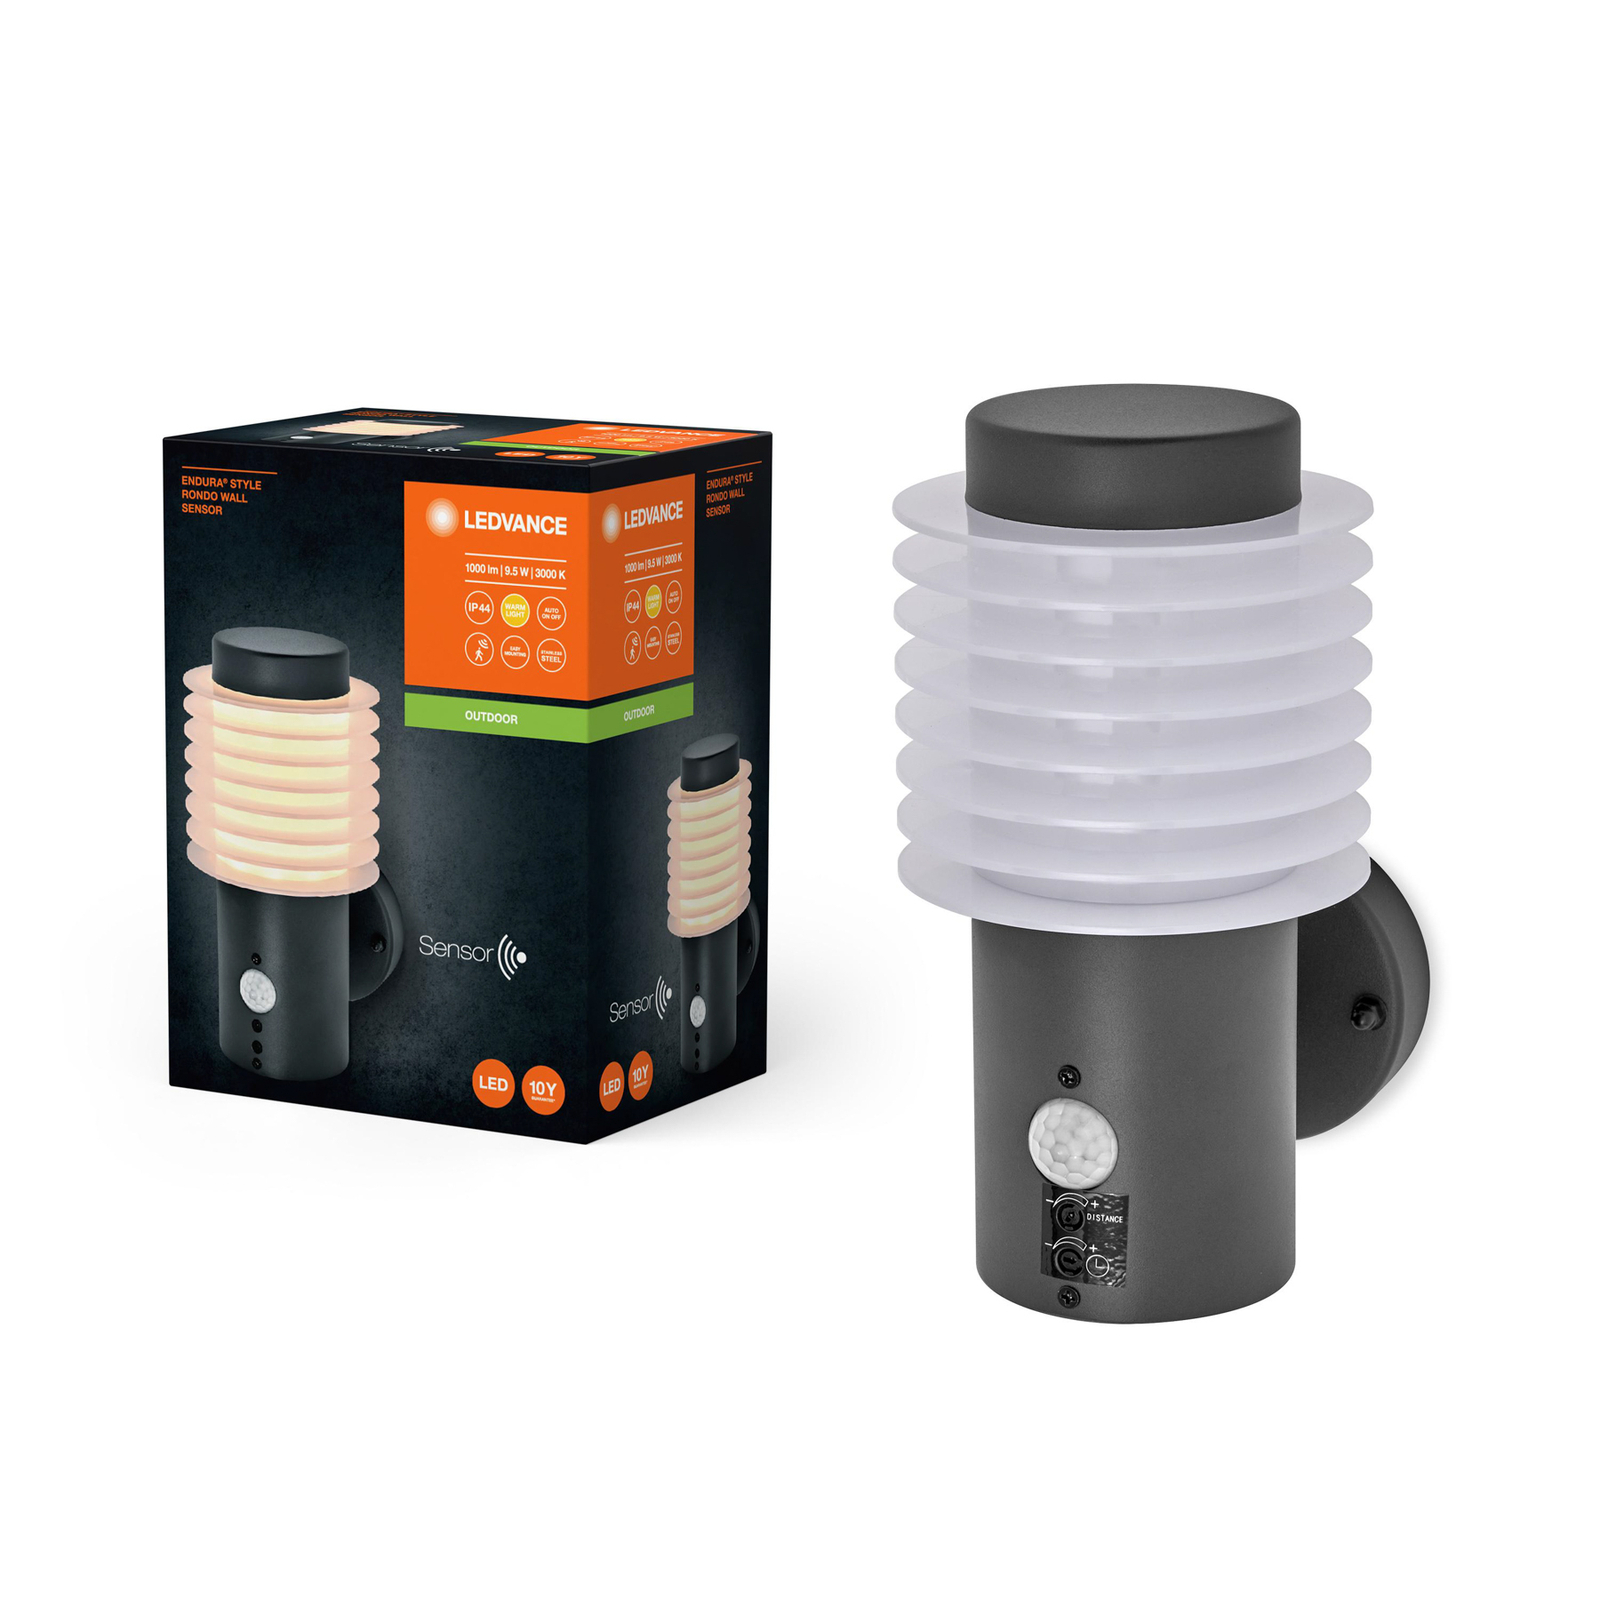 LEDVANCE LED wall lamp Endura Style Rondo dark grey Sensor